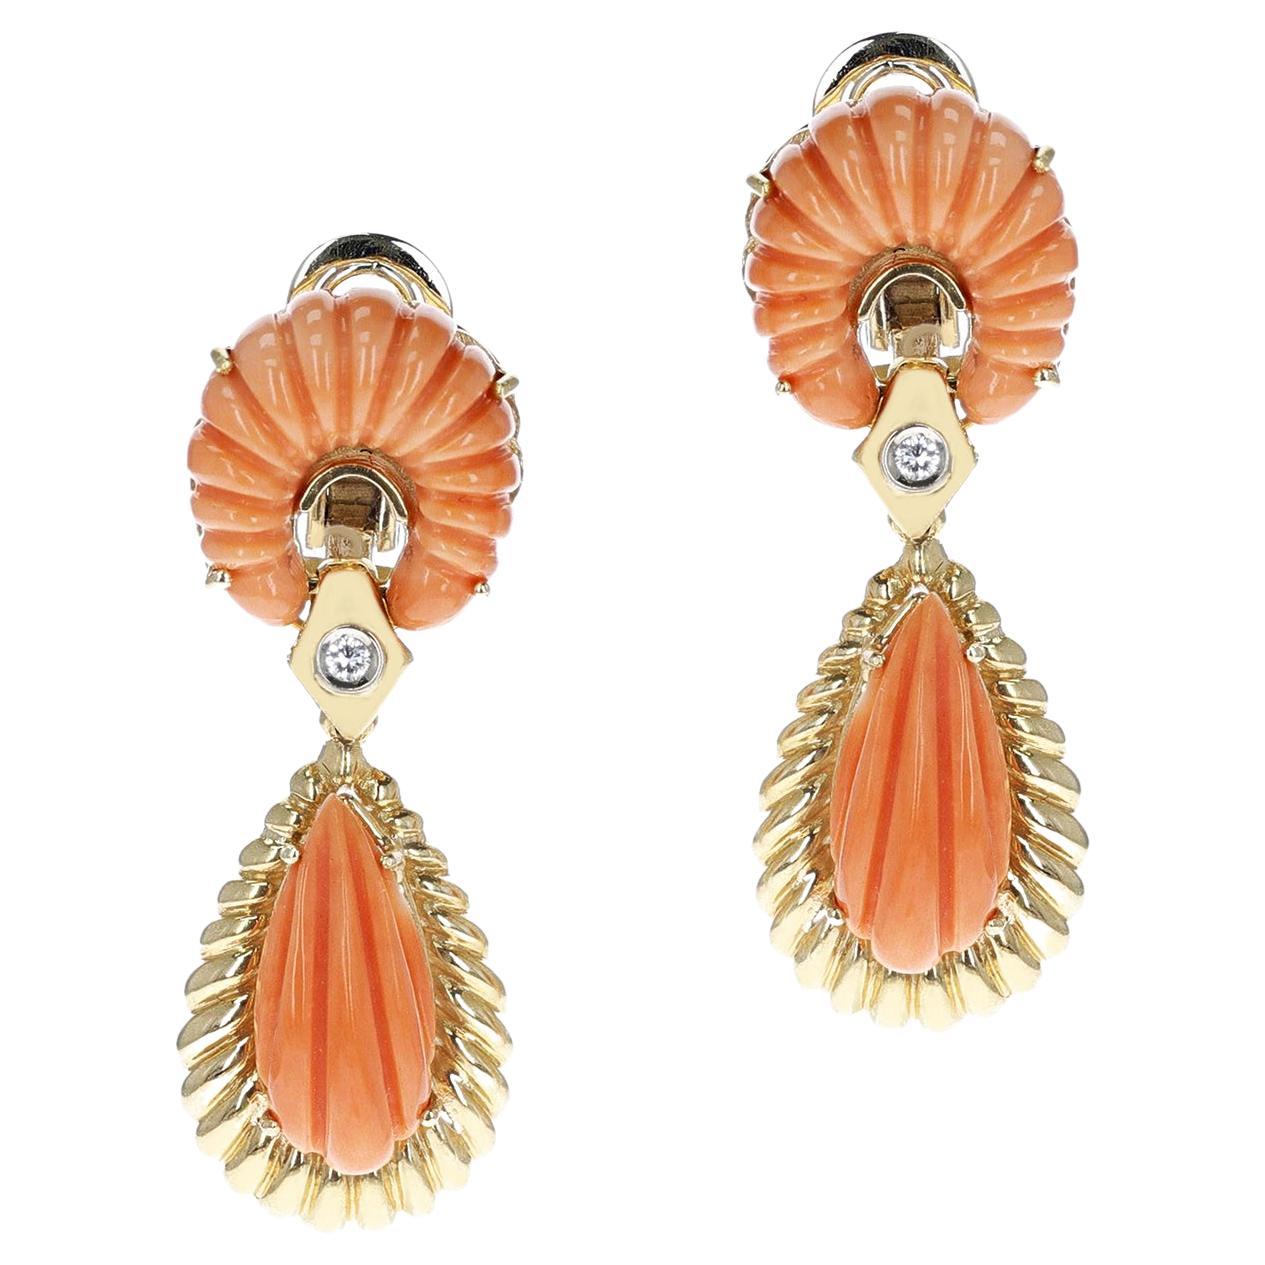 Italienische geschnitzte Korallen-Tropfen-Ohrringe mit Diamanten von Van Cleef & Arpels, 18K